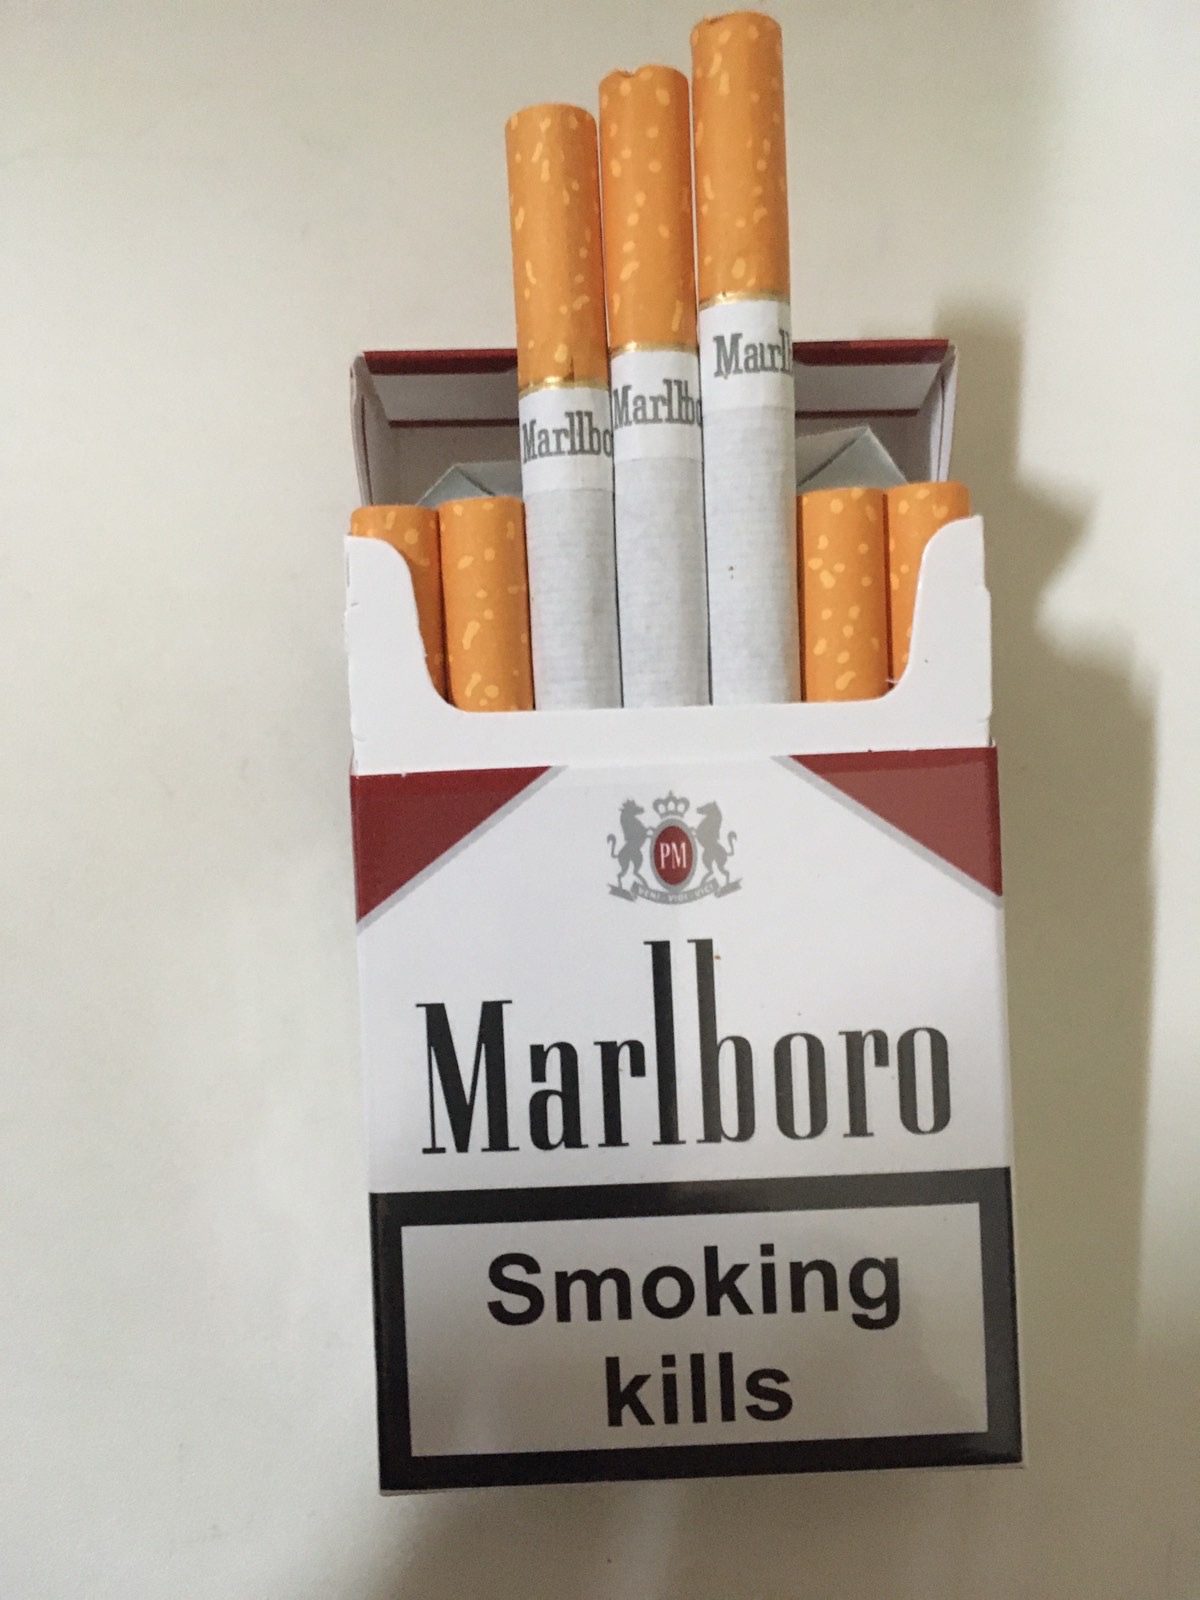 Продам поблочно сигареты Marlboro, Marble - фотография